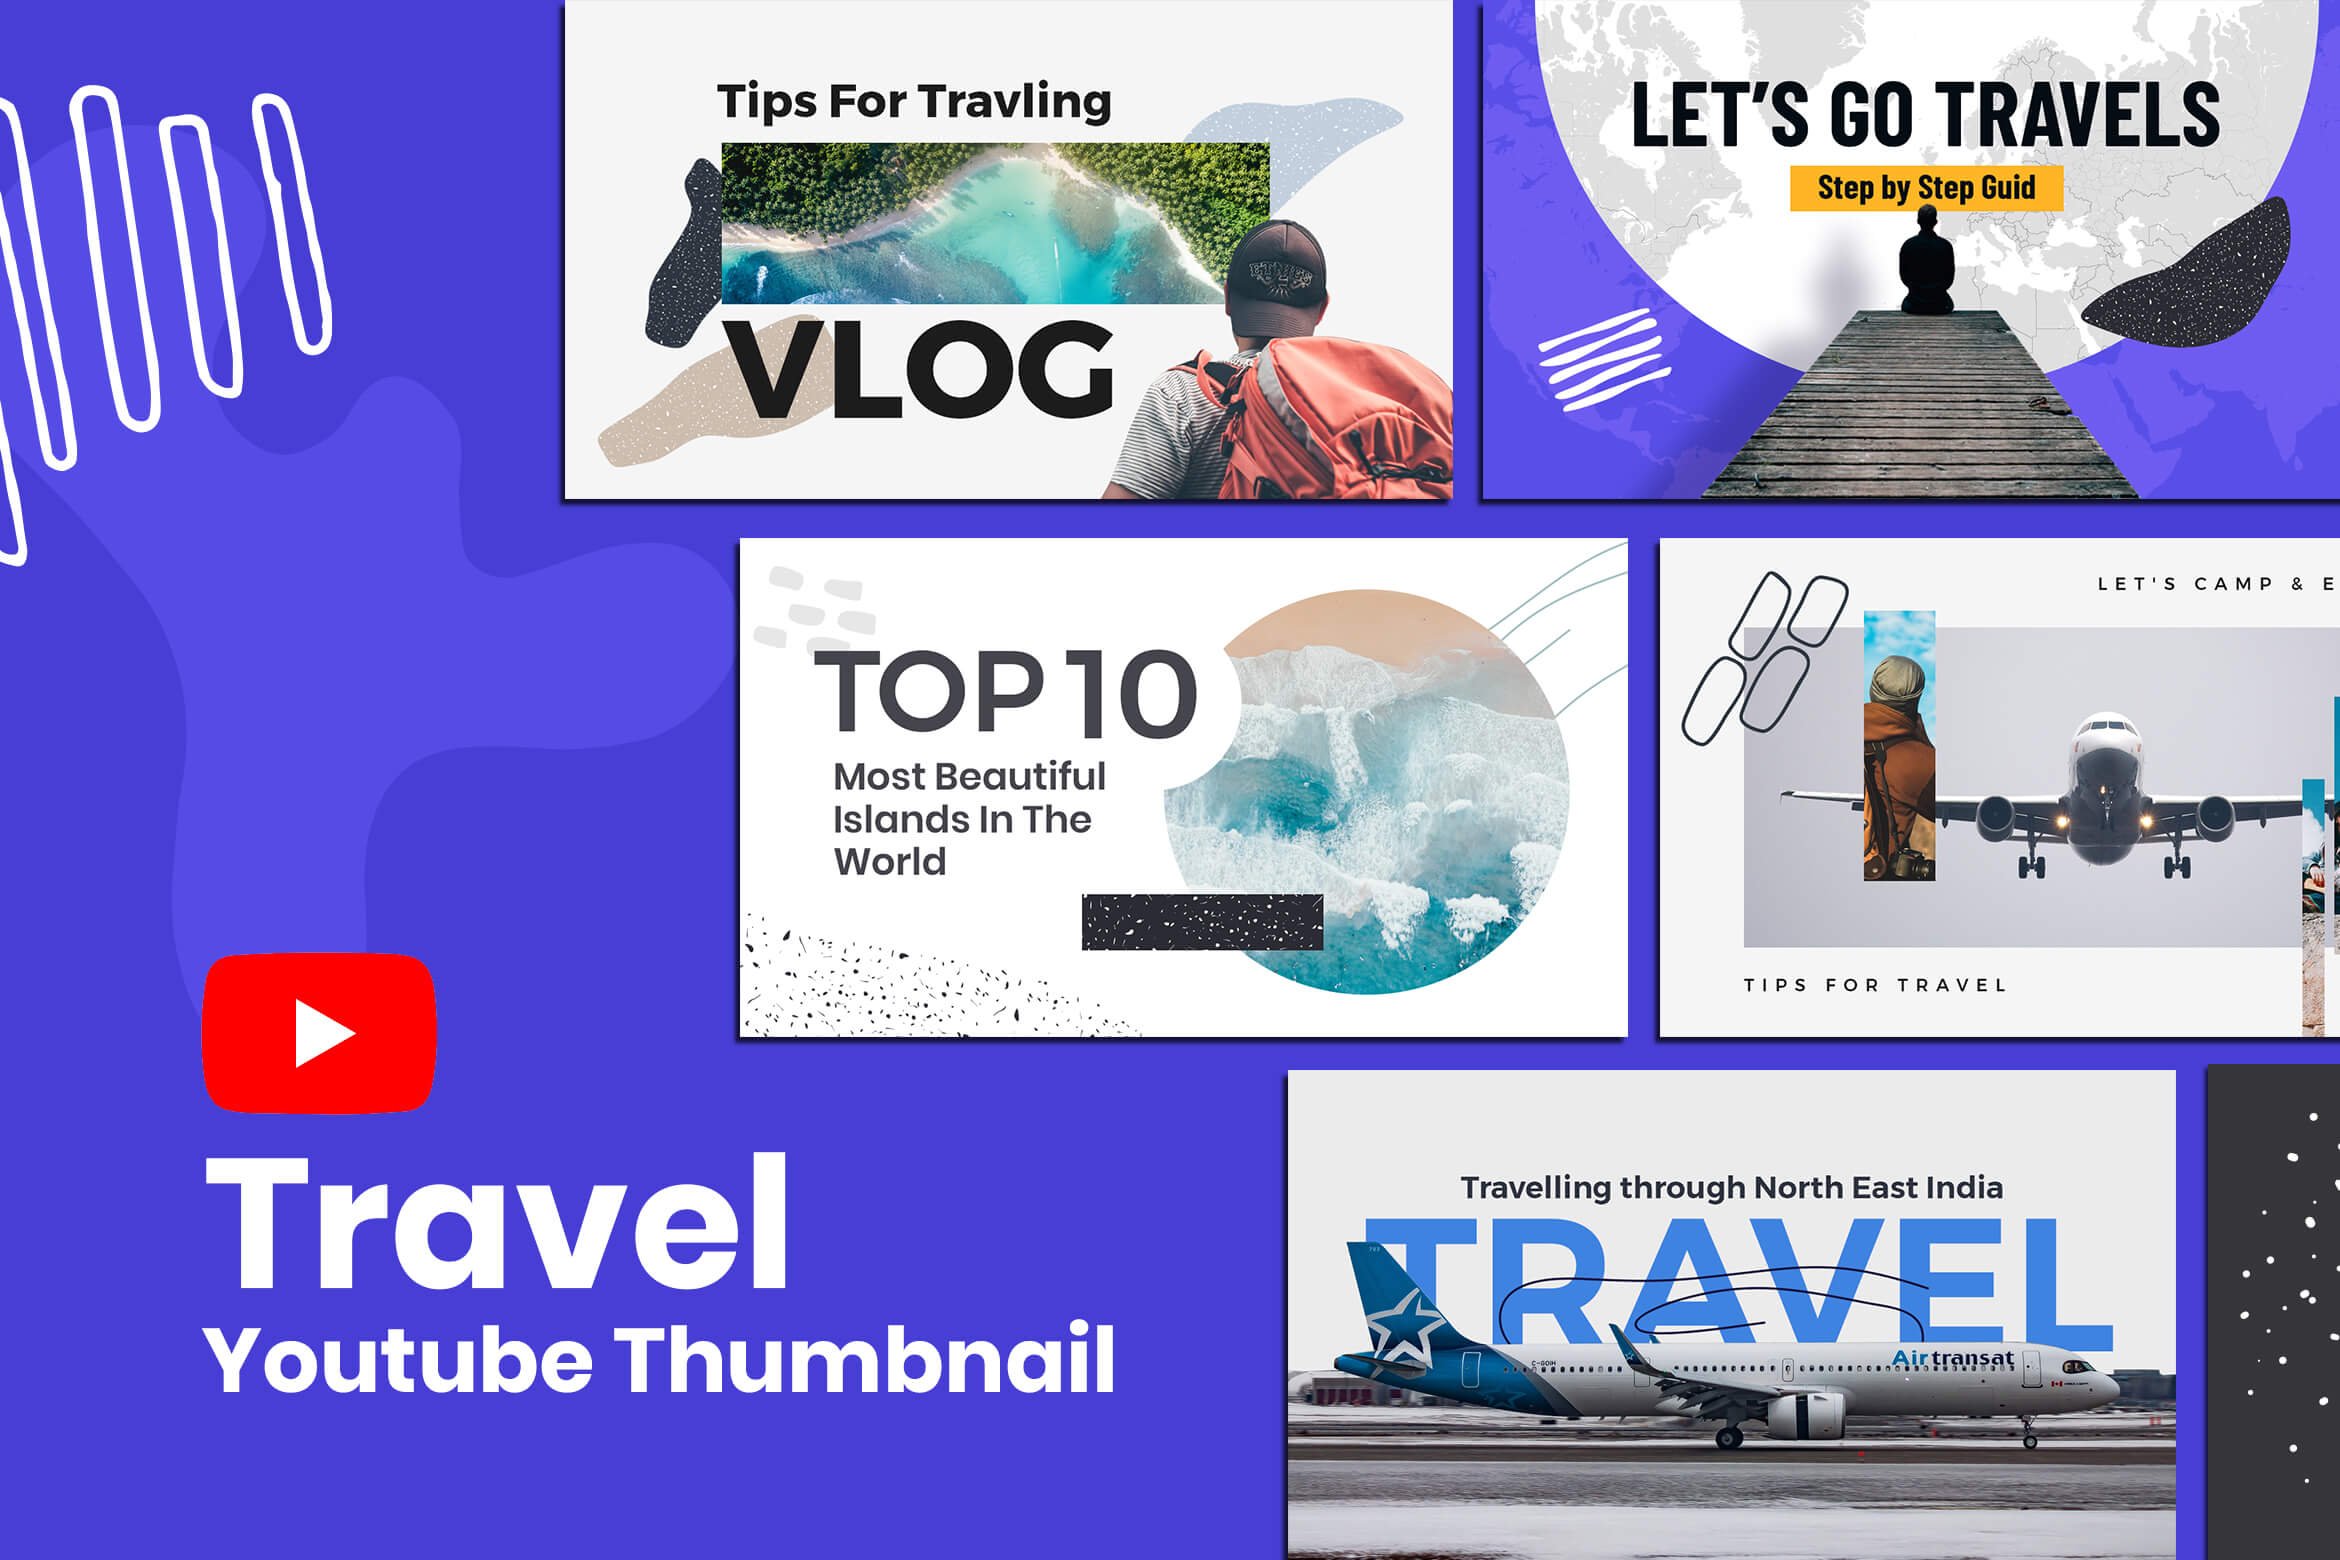 Travel Youtube Thumbnail